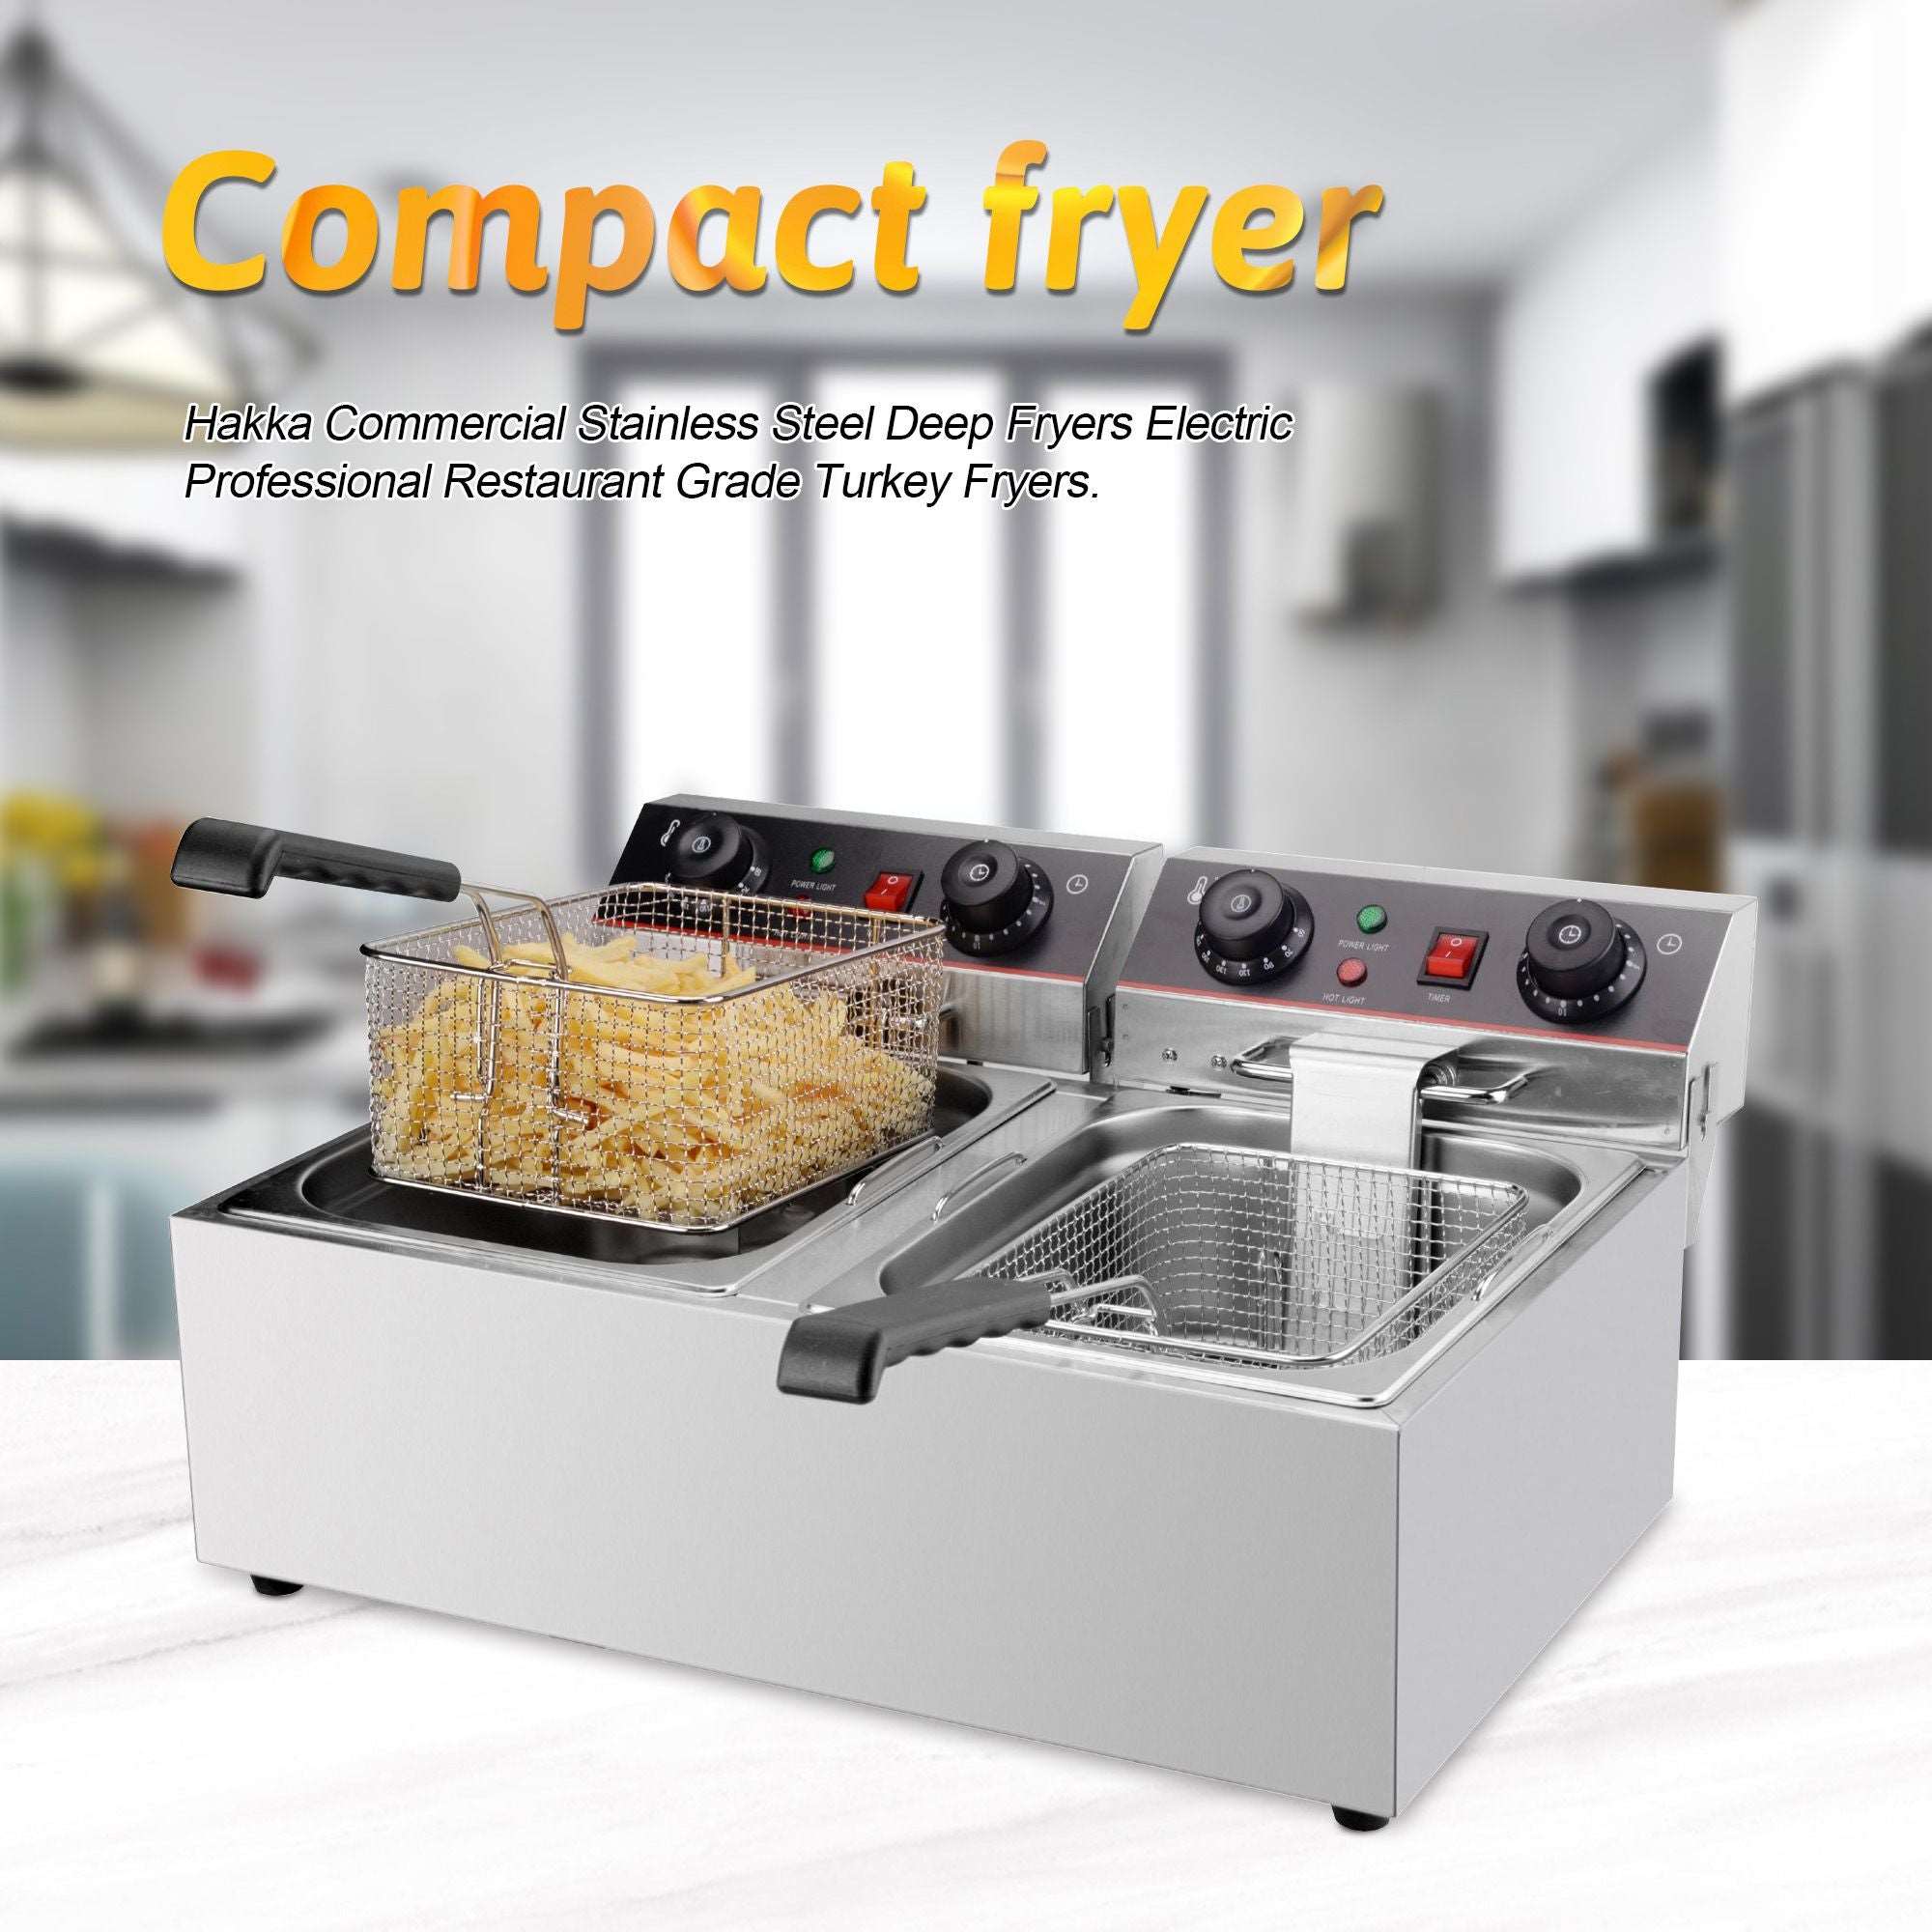 EasyRose Commercial Stainless Steel Deep Fryers Electric Professional Restaurant Grade Turkey Fryers (2x8 Liter)